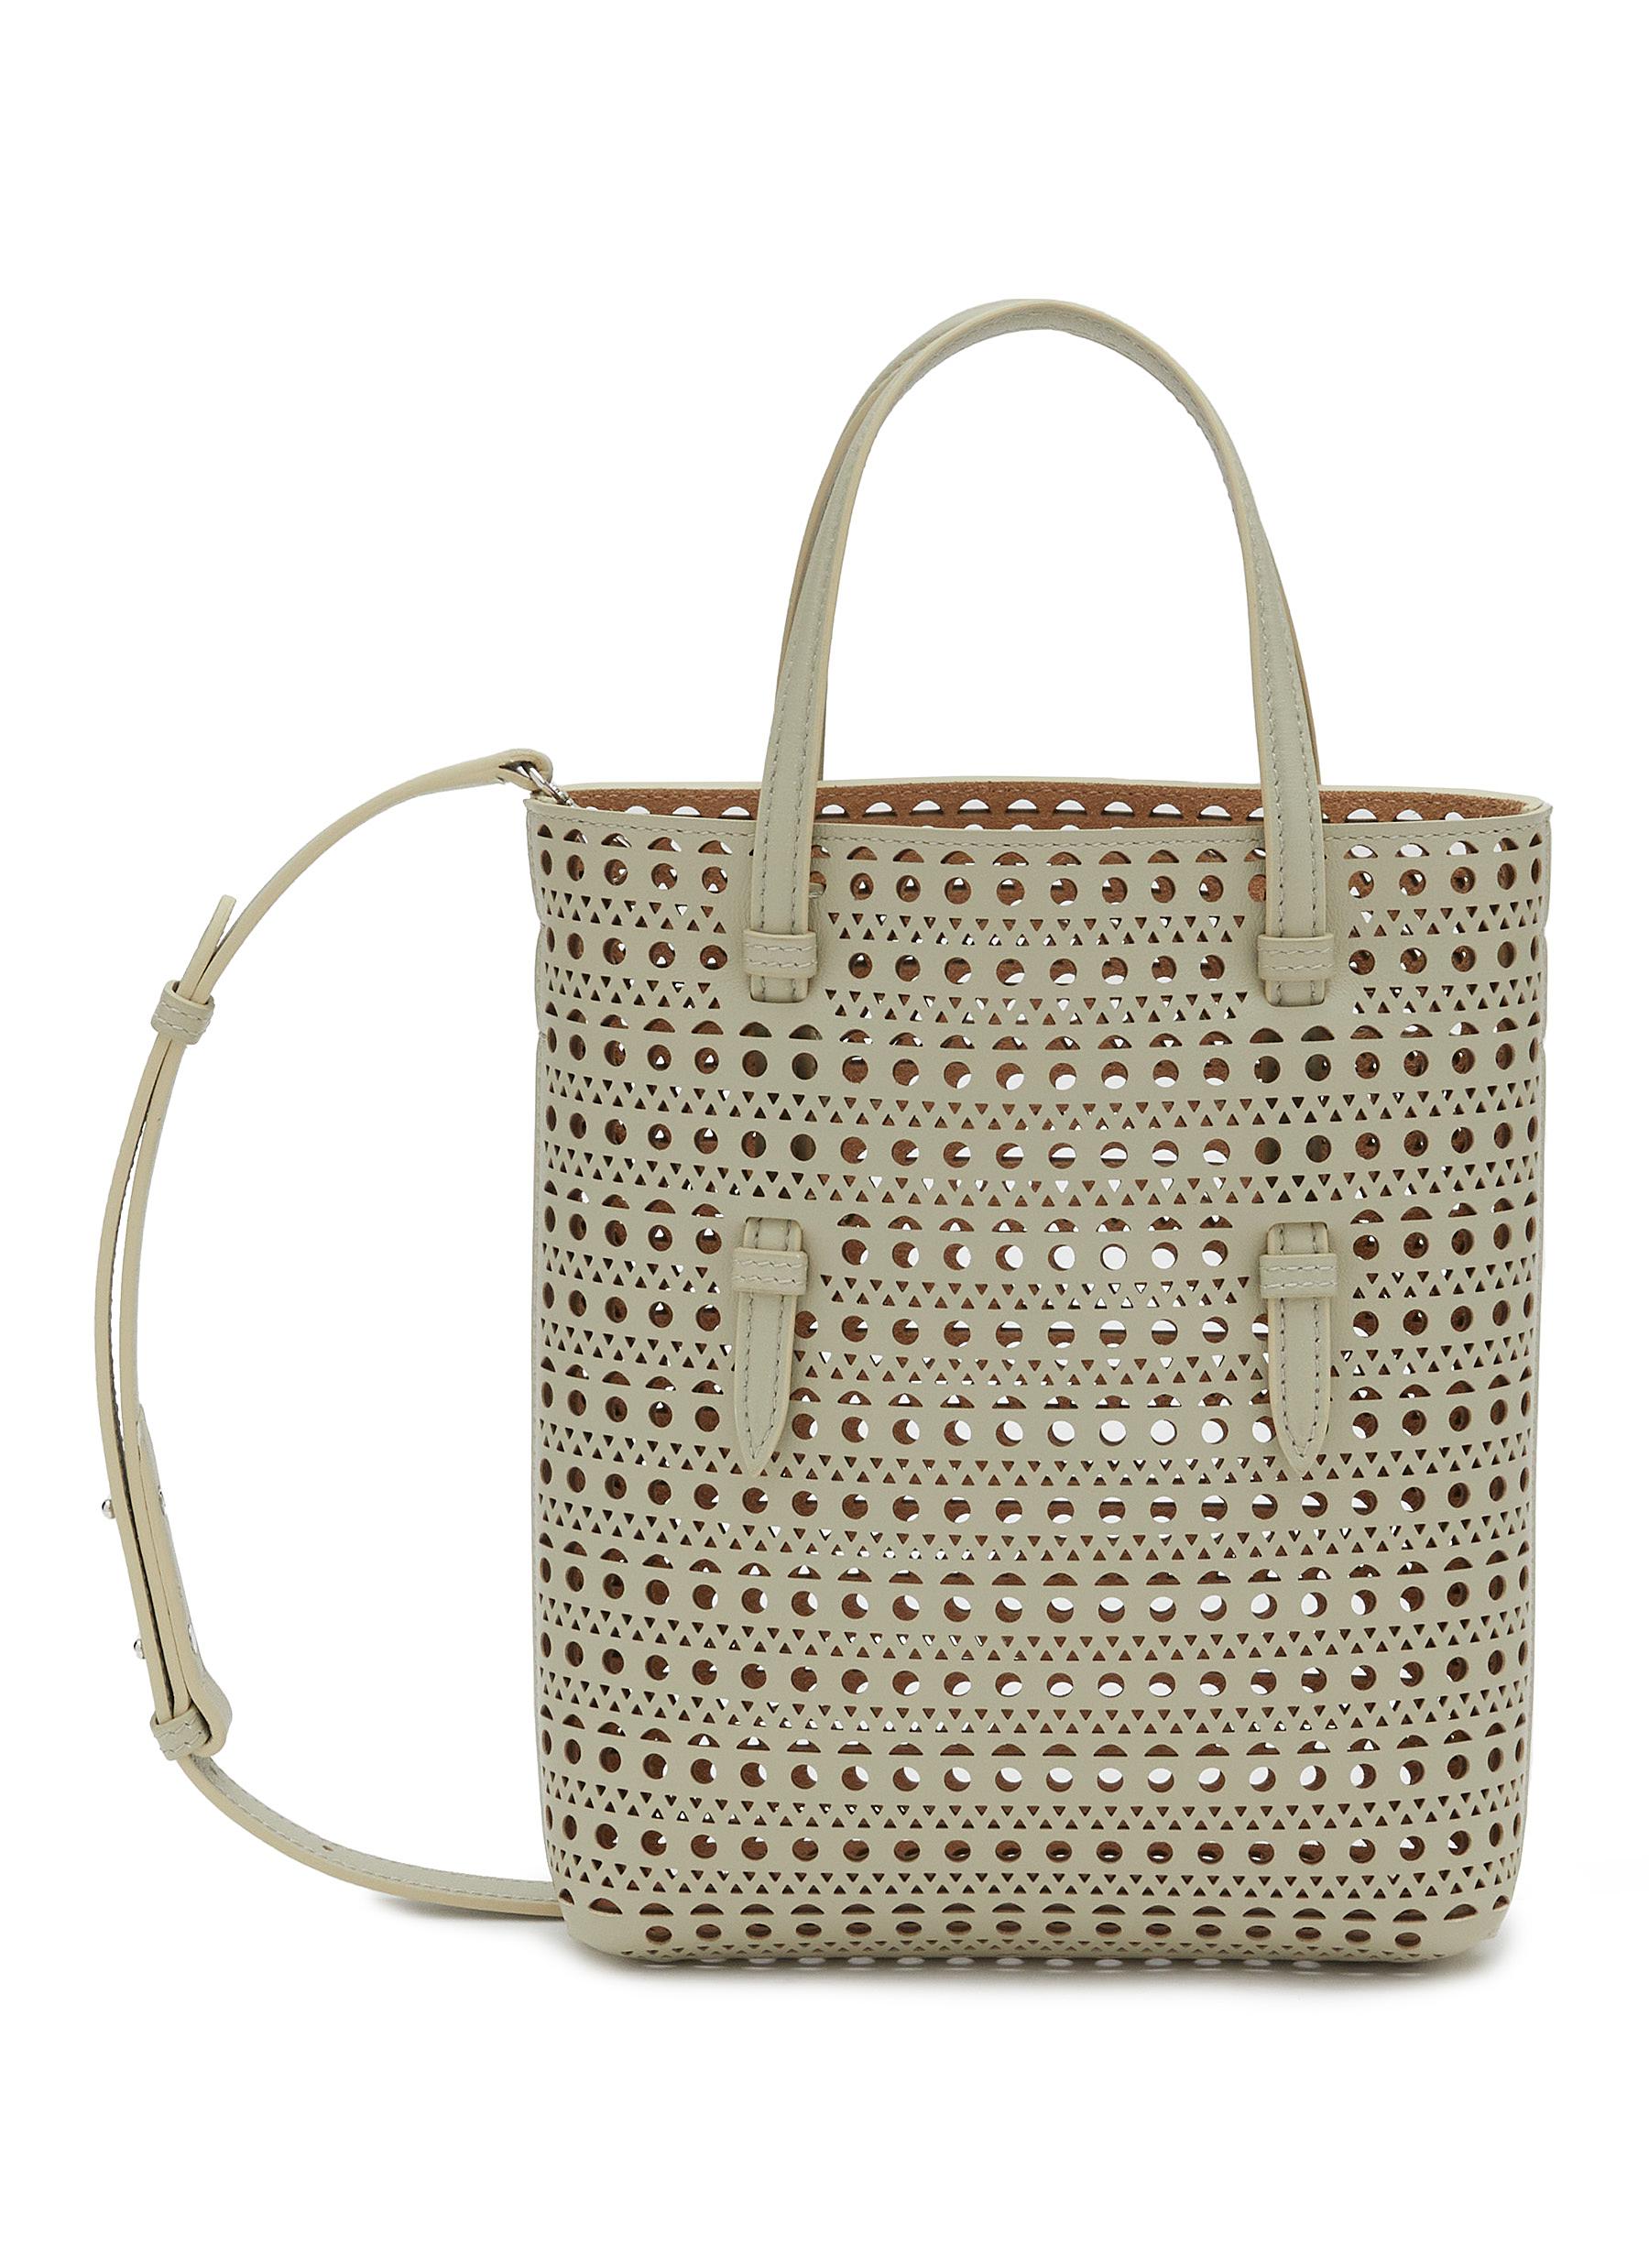 ALAÏA Mina N/S Perforated Leather Tote Bag